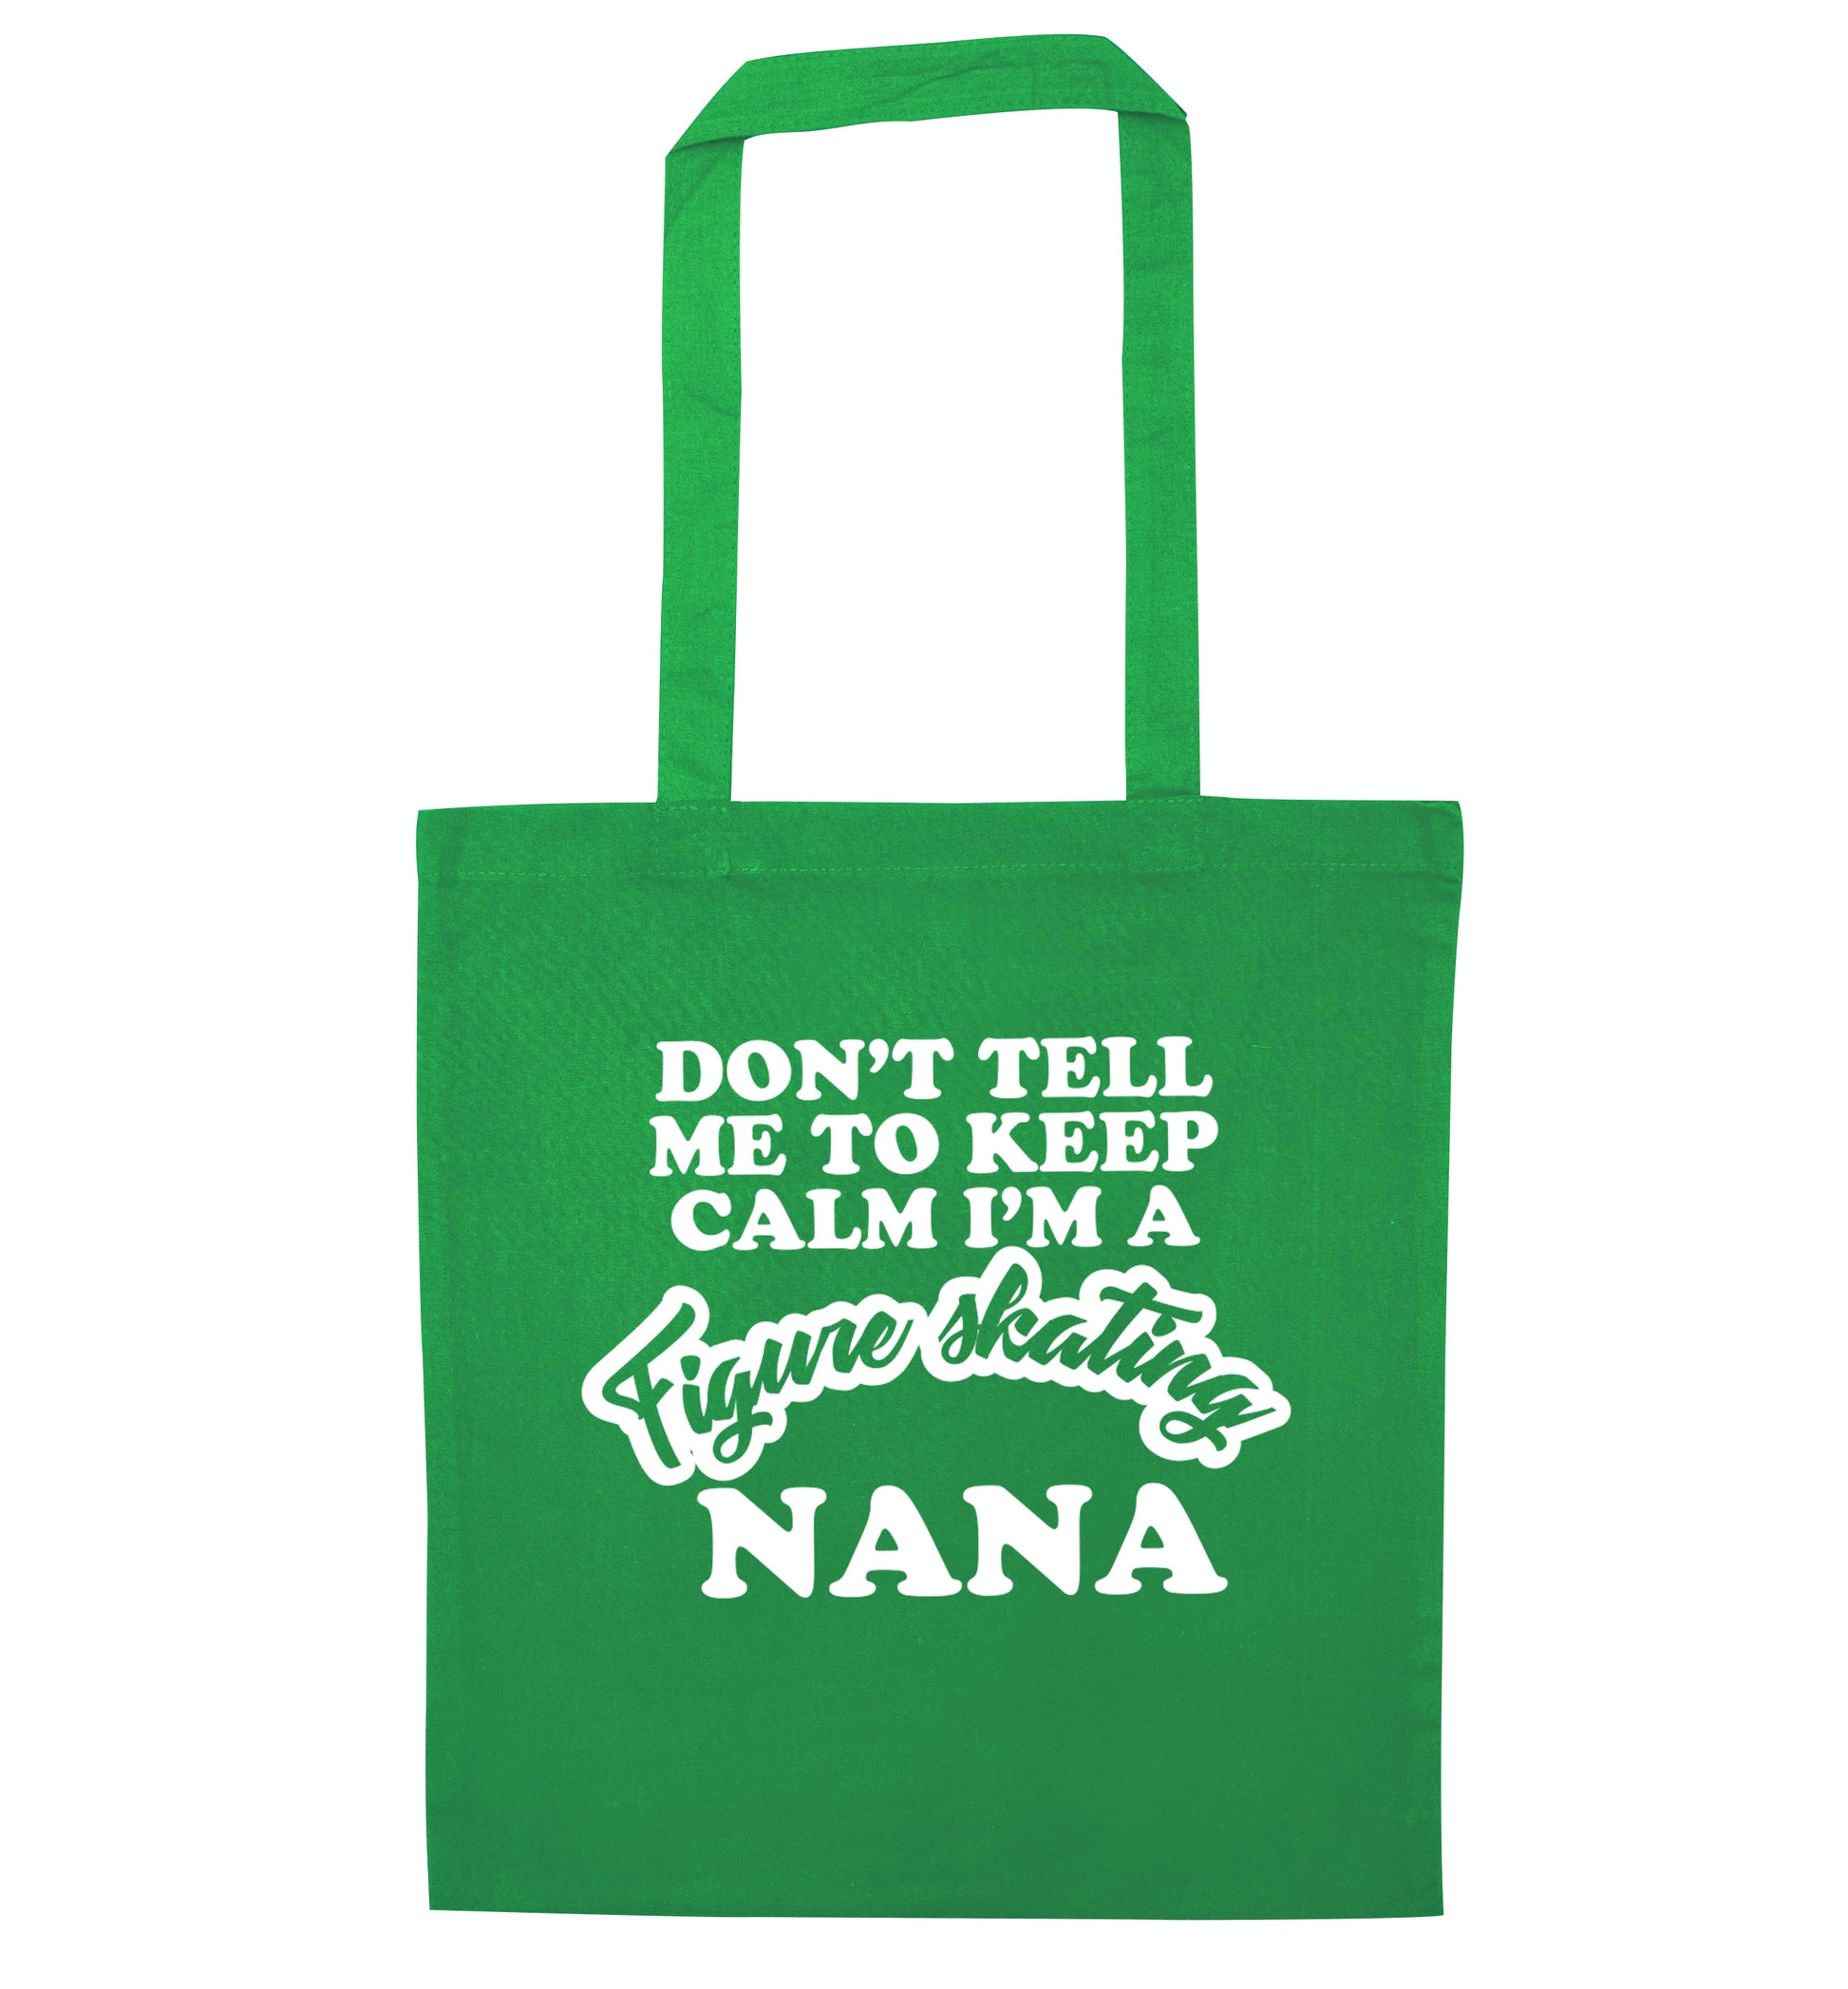 Don't tell me to keep calm I'm a figure skating nana green tote bag